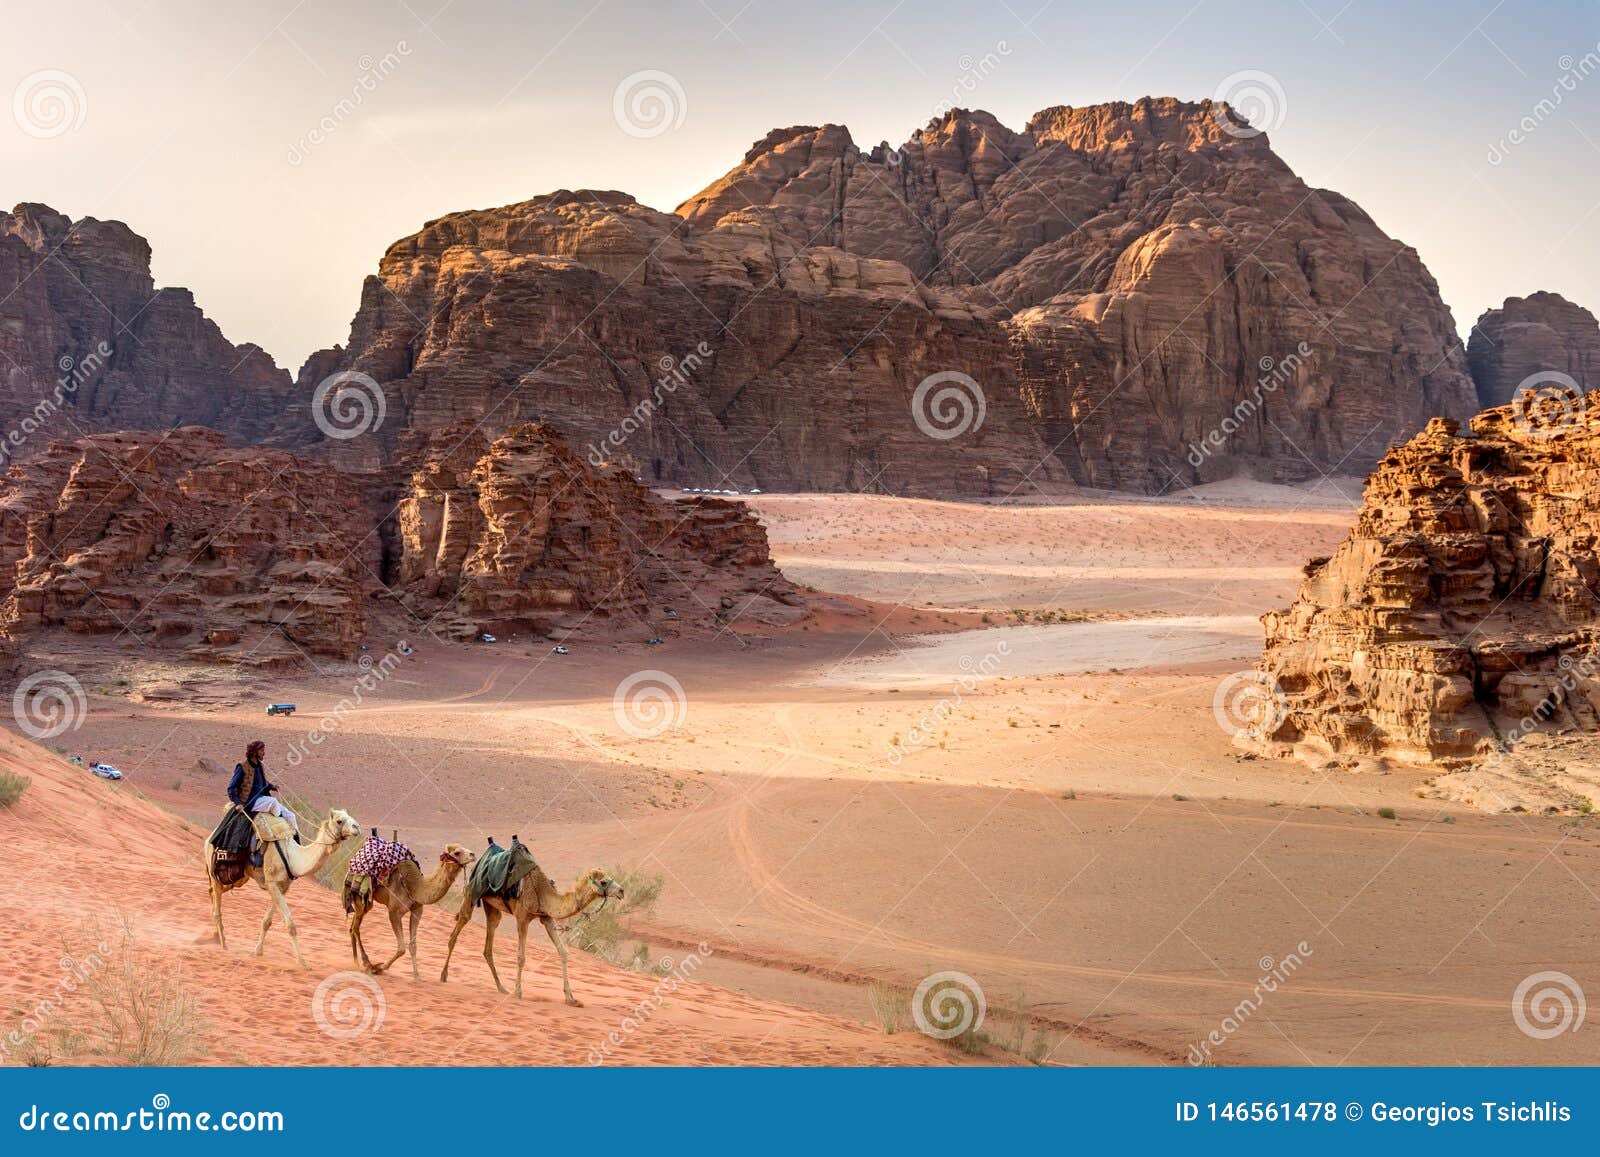 Mart Piping Løve Beduin and Camels in Wadi Rum Desert in Jordan. Editorial Stock Photo -  Image of riding, caravan: 146561478